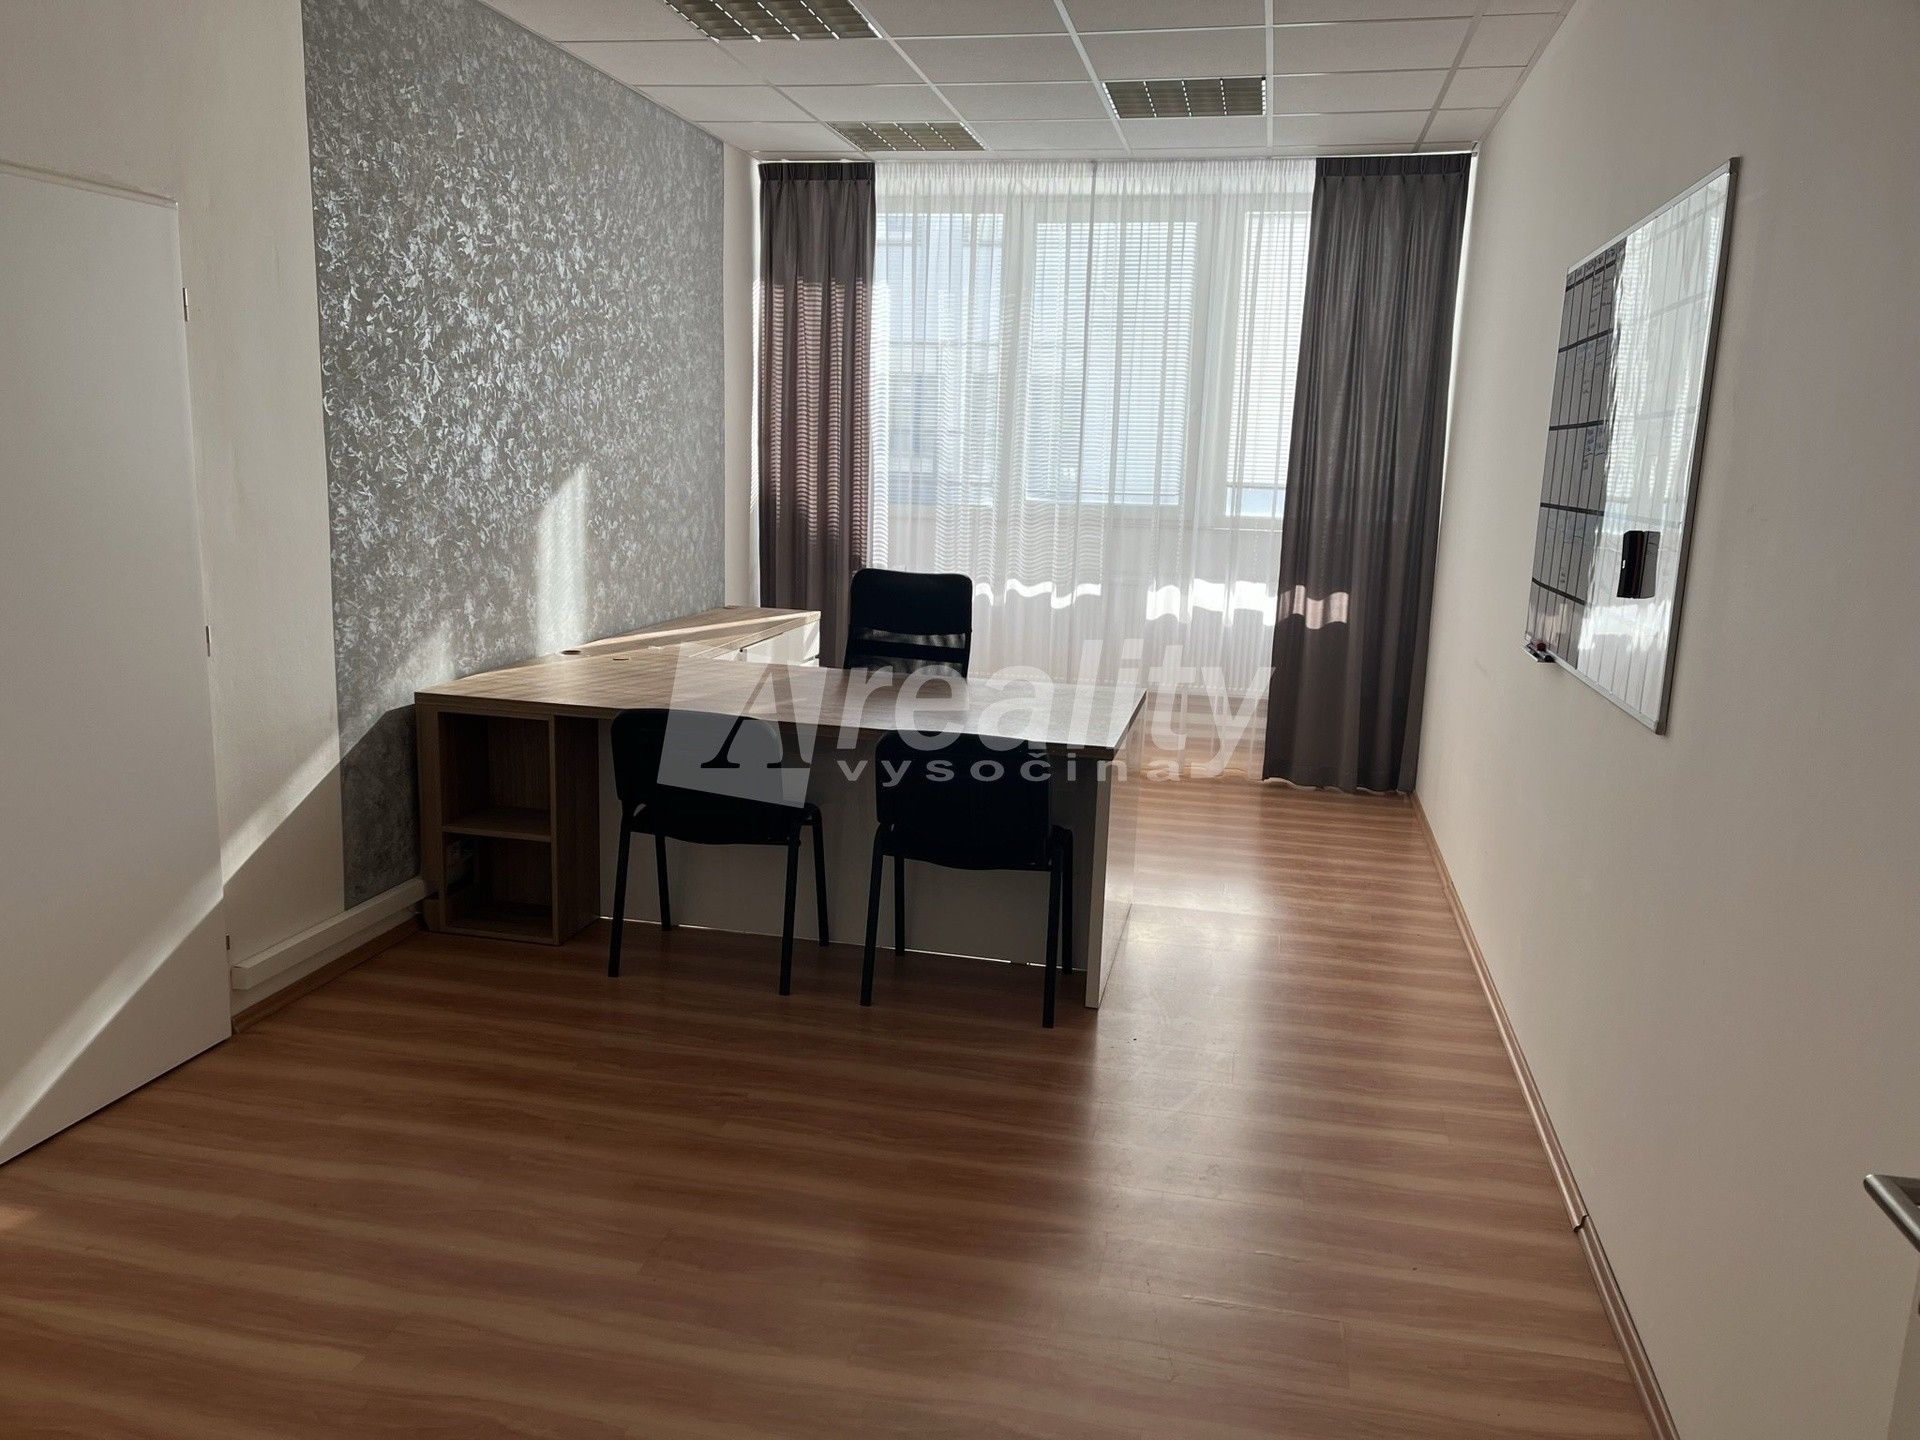 Pronájem kancelář - Chlumova, Jihlava, Česko, 55 m²